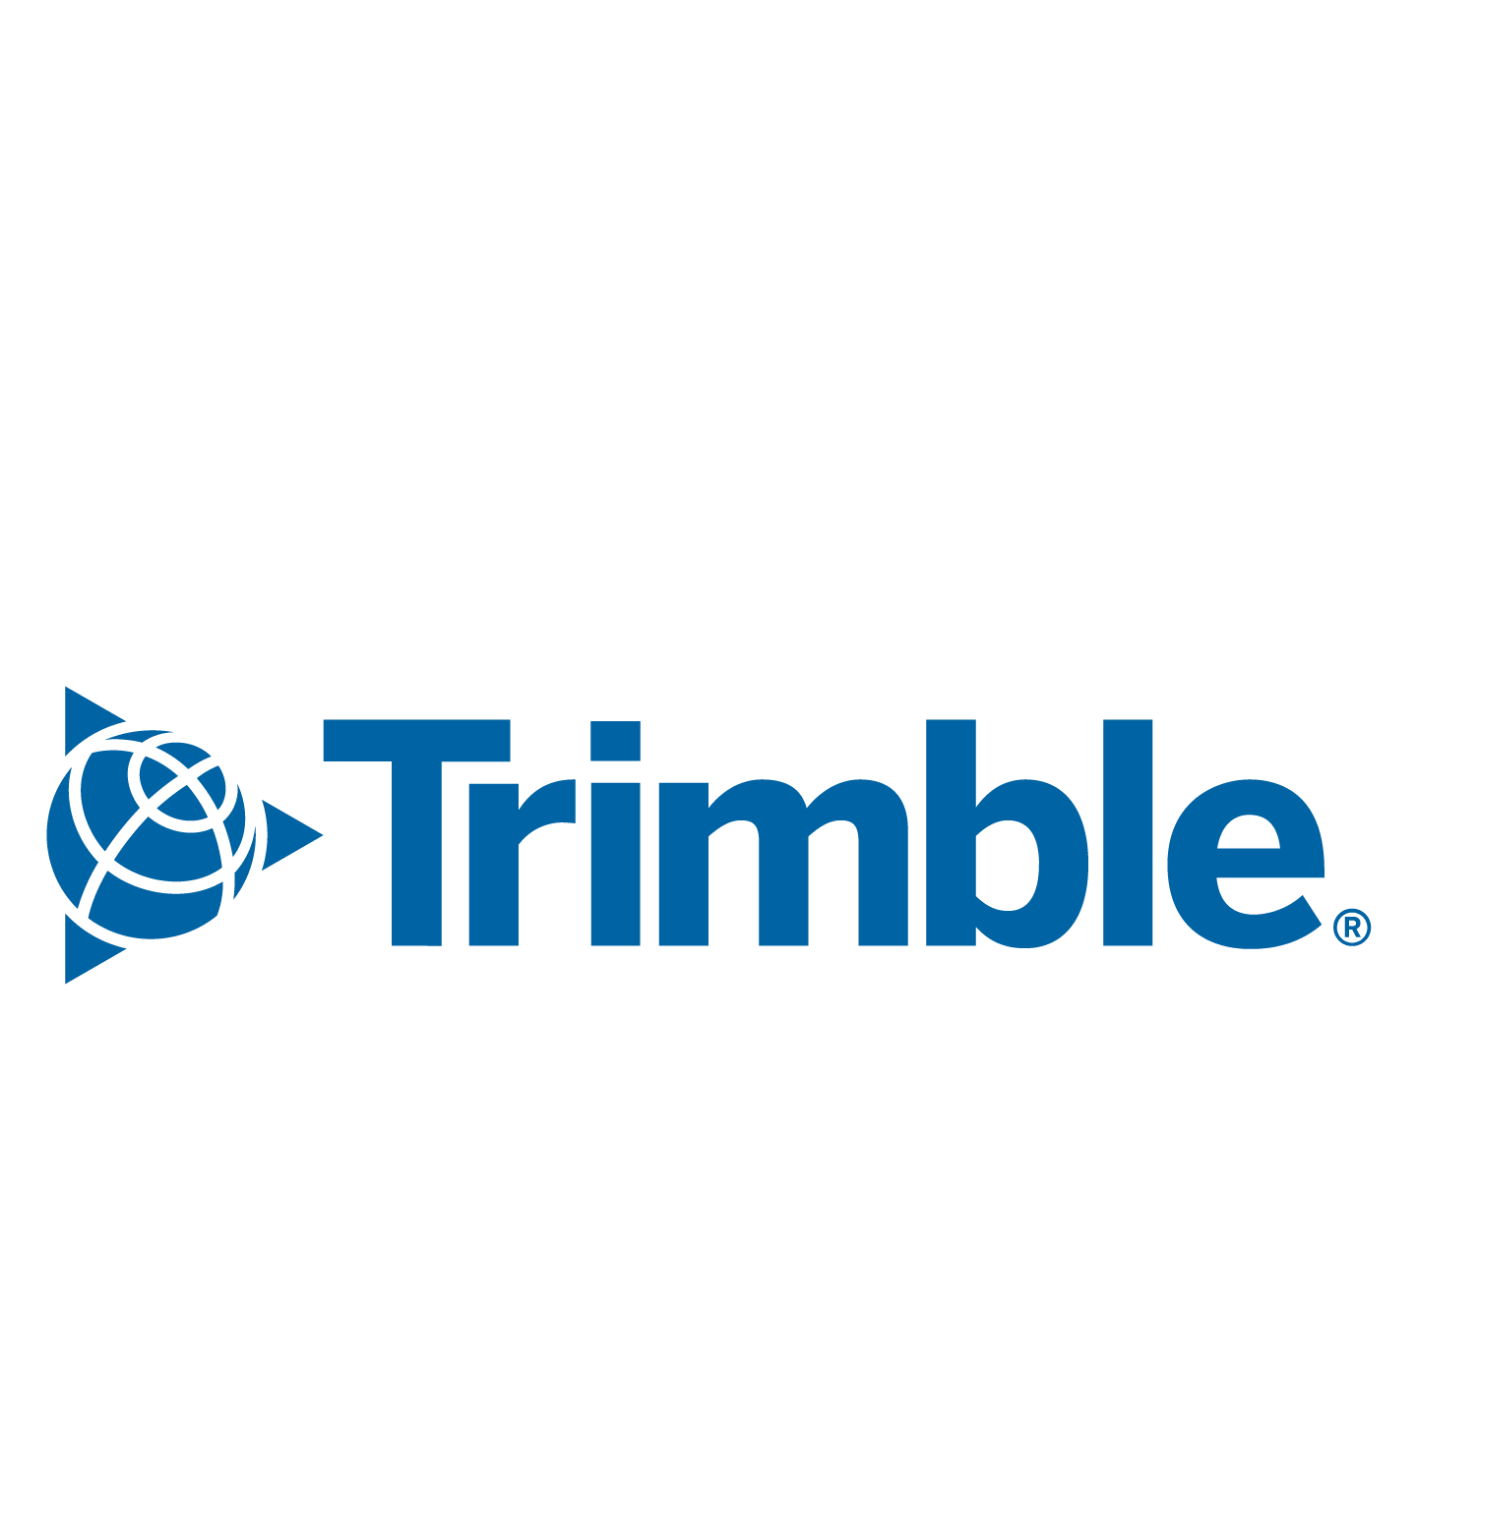 LARGE - Trimble-1